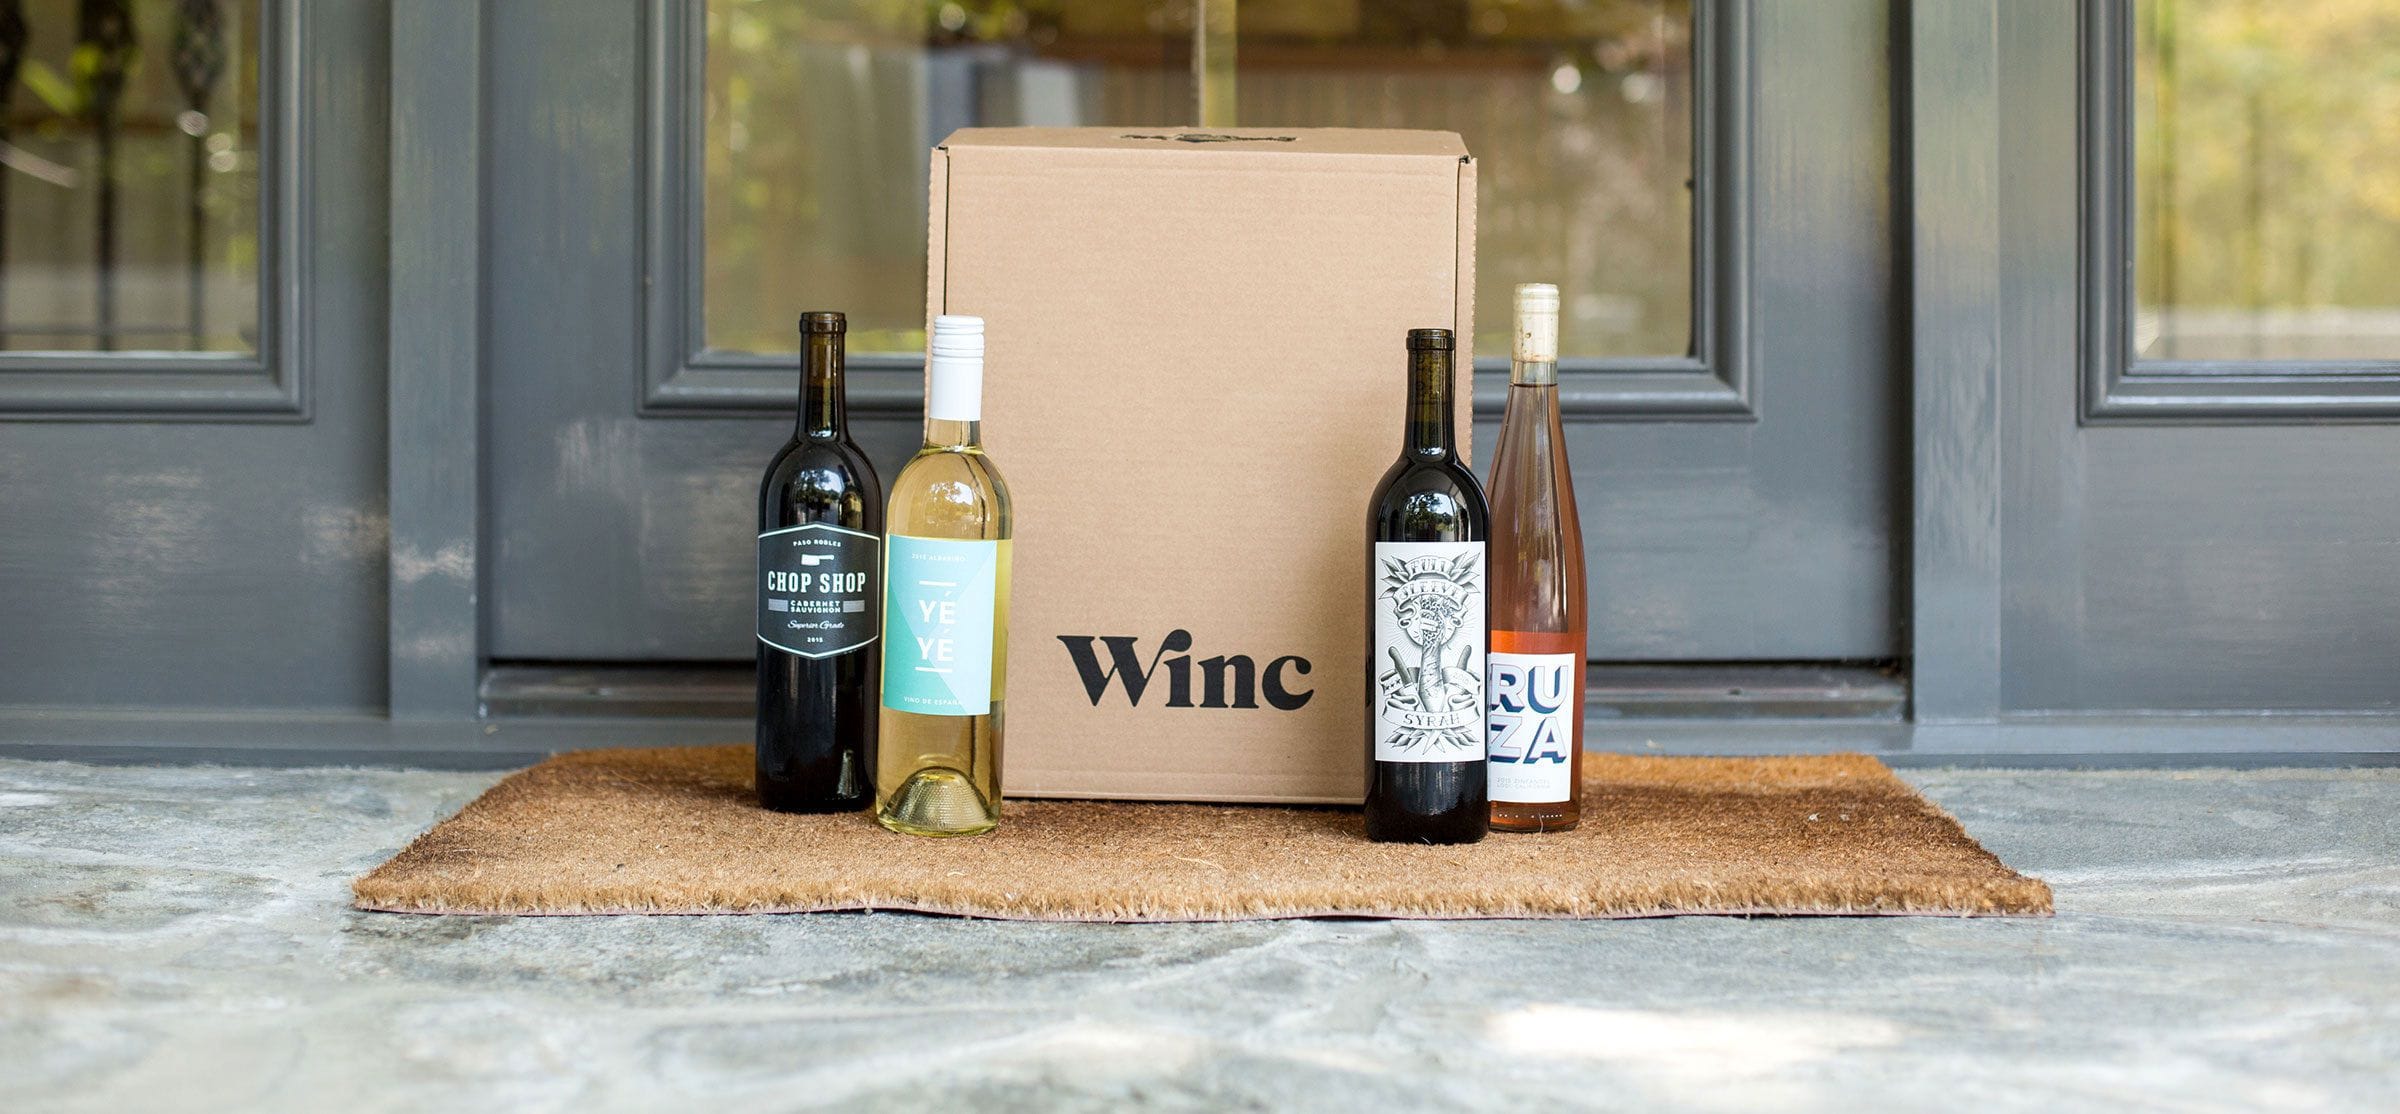 Wine subscription box on doorstep 